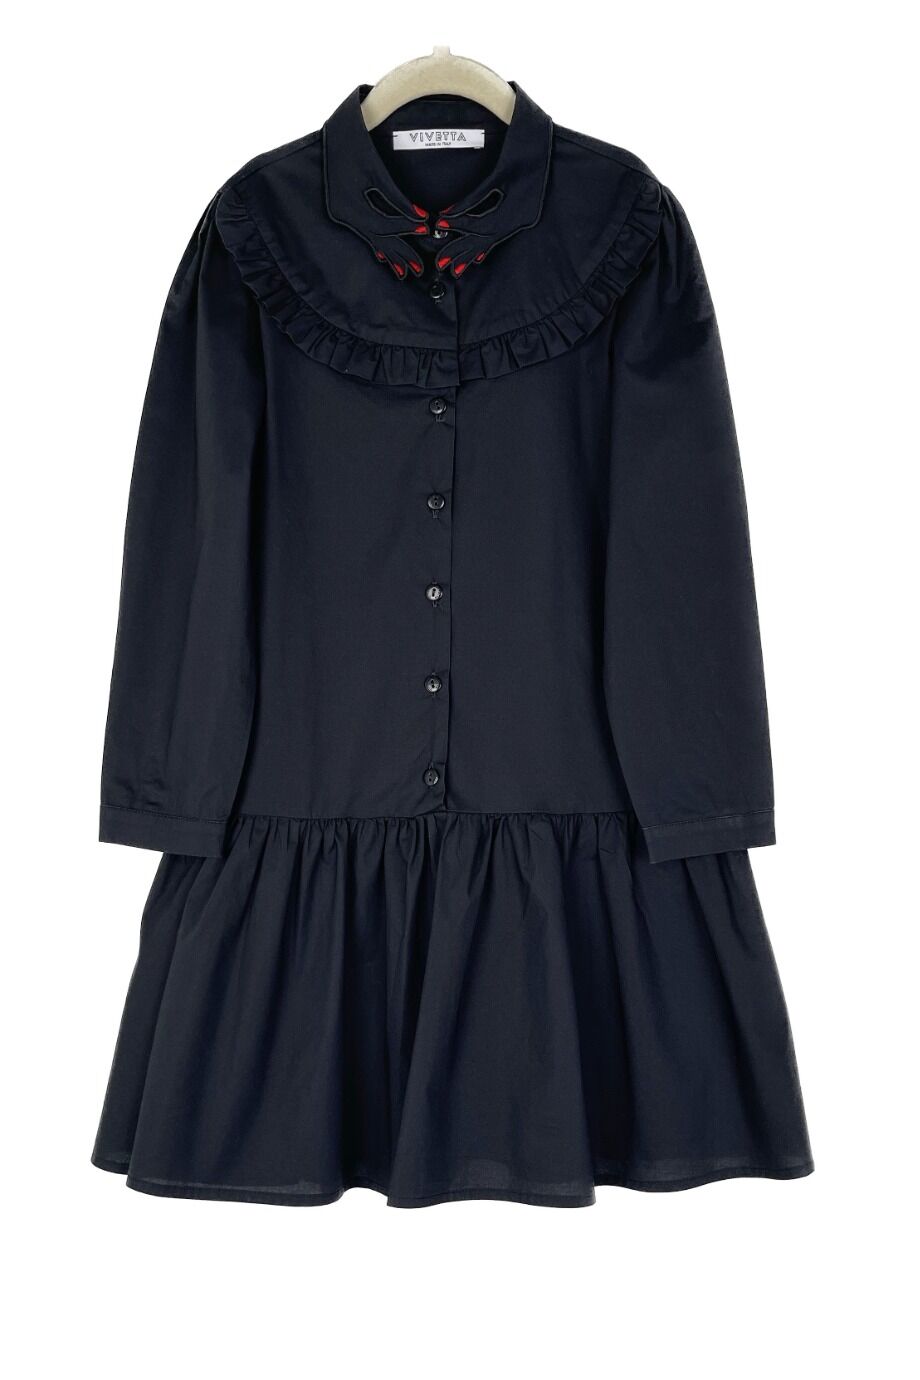 image 1 Детское платье рубашка чёрного цвета